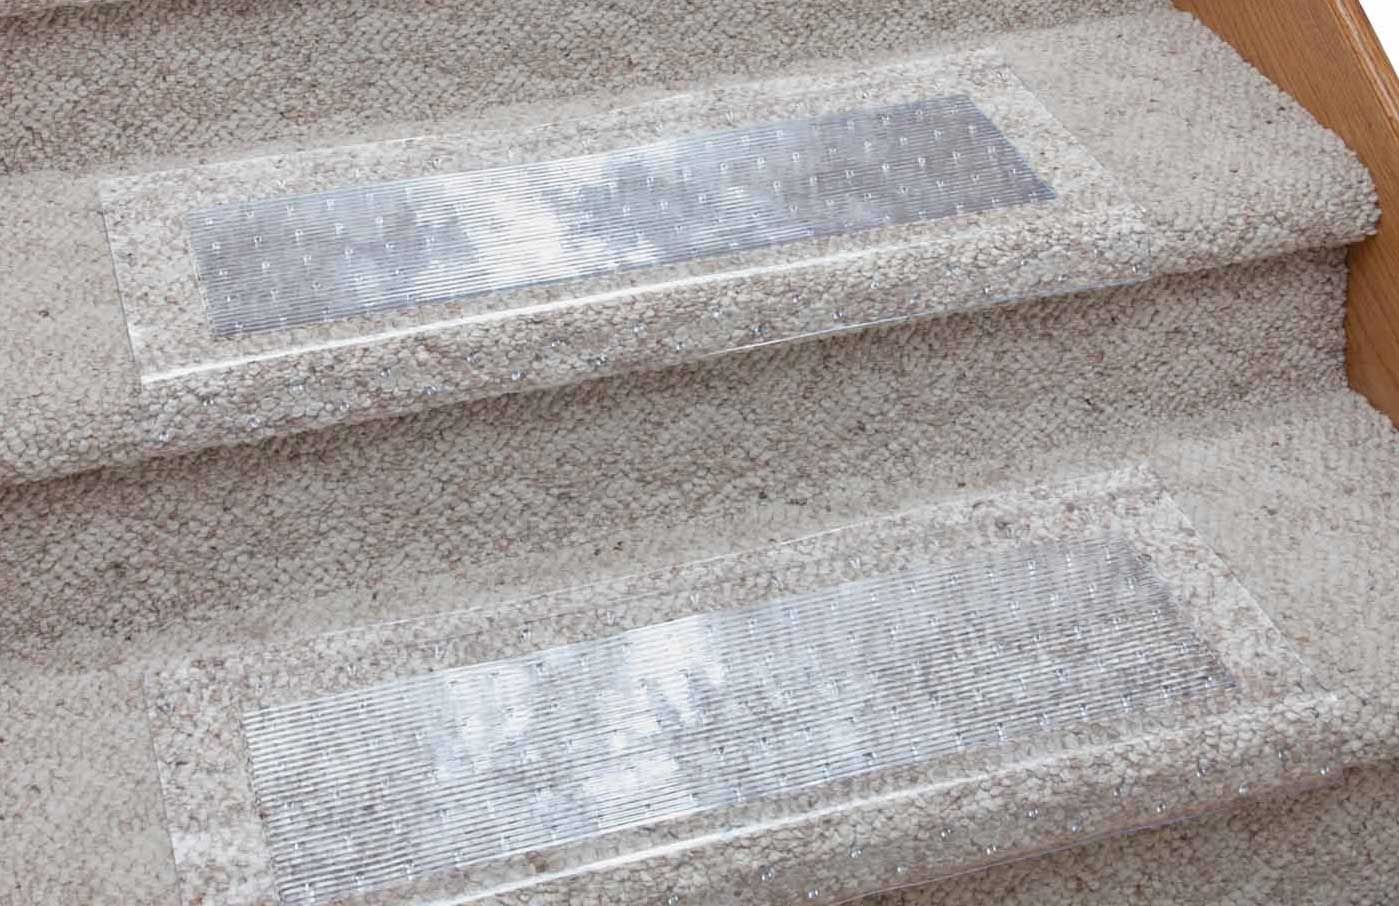 23 Hard Plastic Carpet Protector Plastic Protector Film Pertaining To Plastic Carpet Protector Hallway Runners (View 8 of 20)